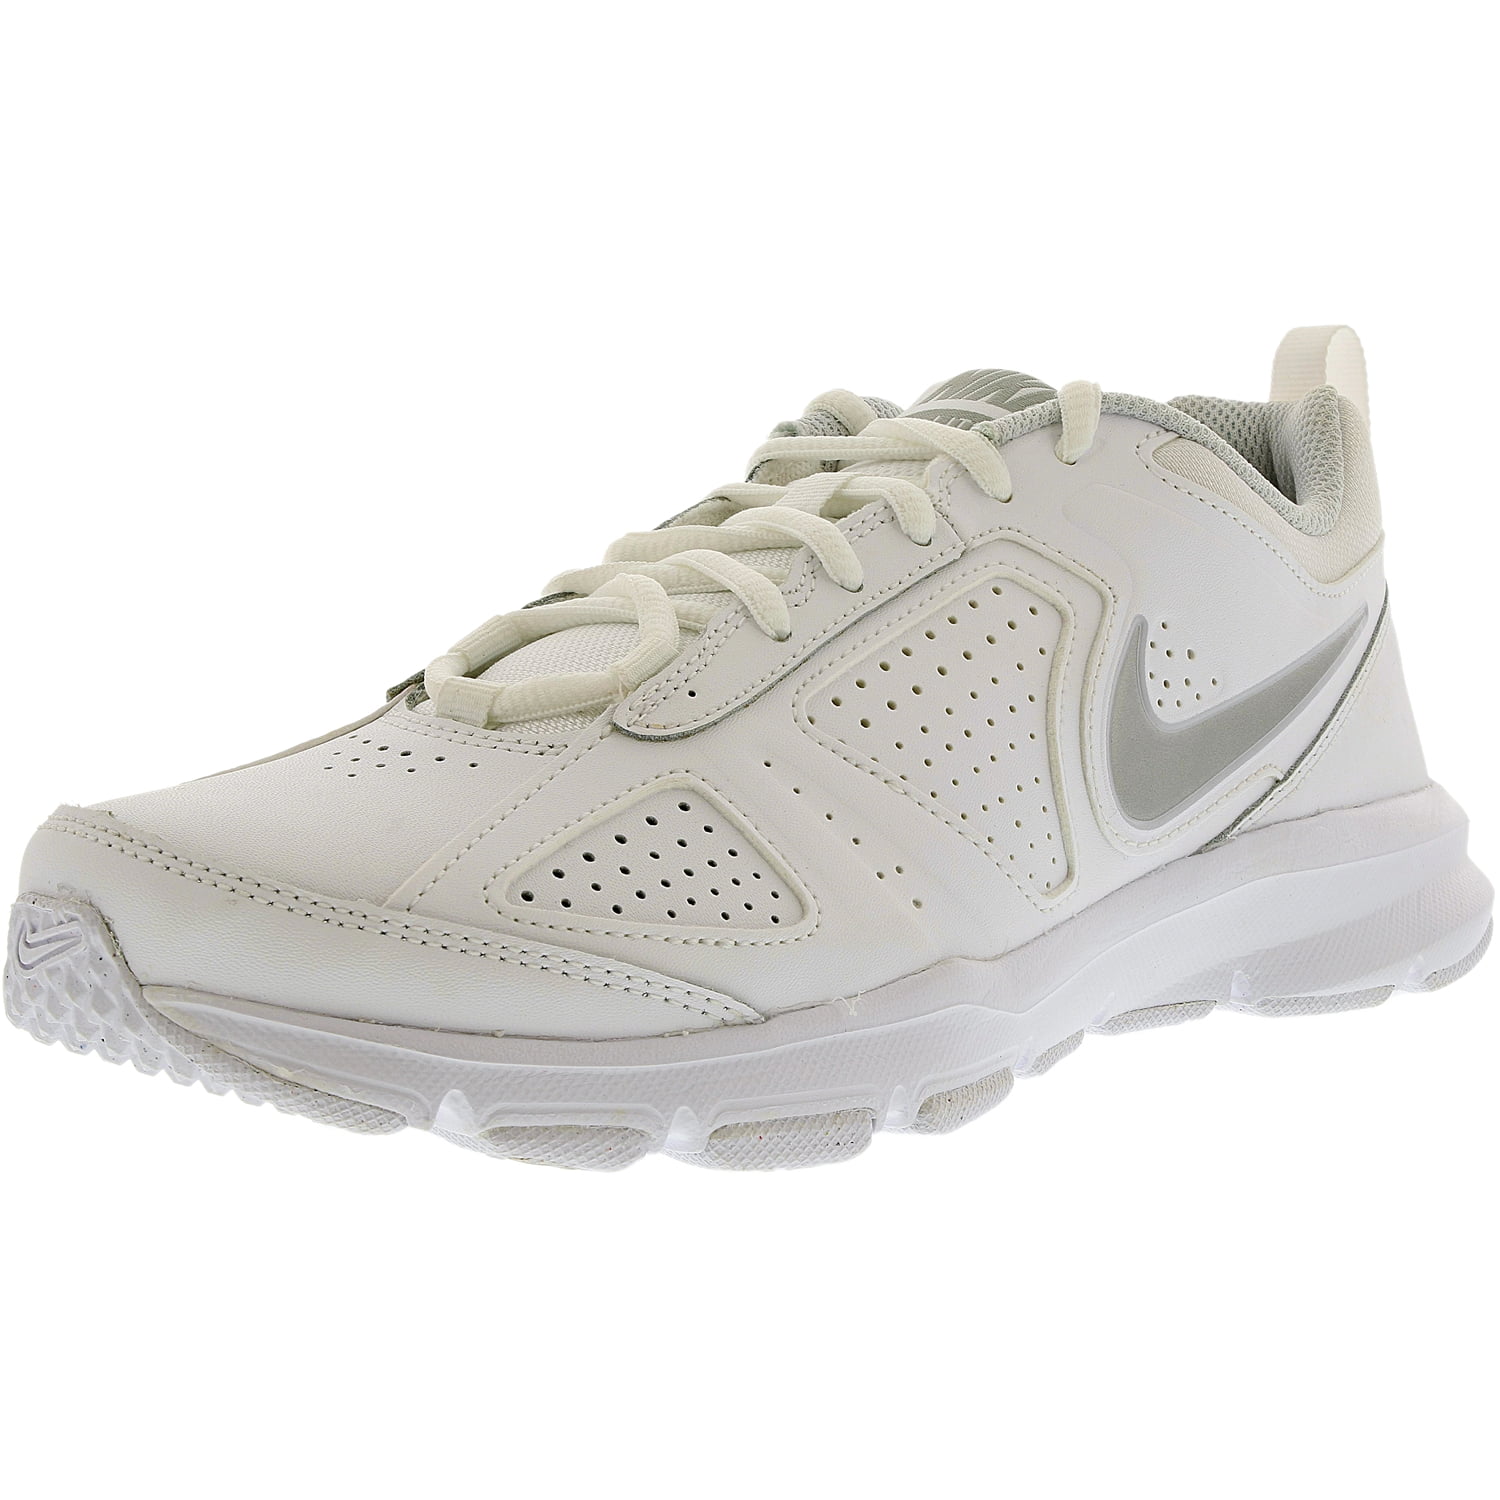 Nike Men's T-Lite White/Metallic Silver/Pure Platinum/Black Tennis Shoe - 7.5M - Walmart.com